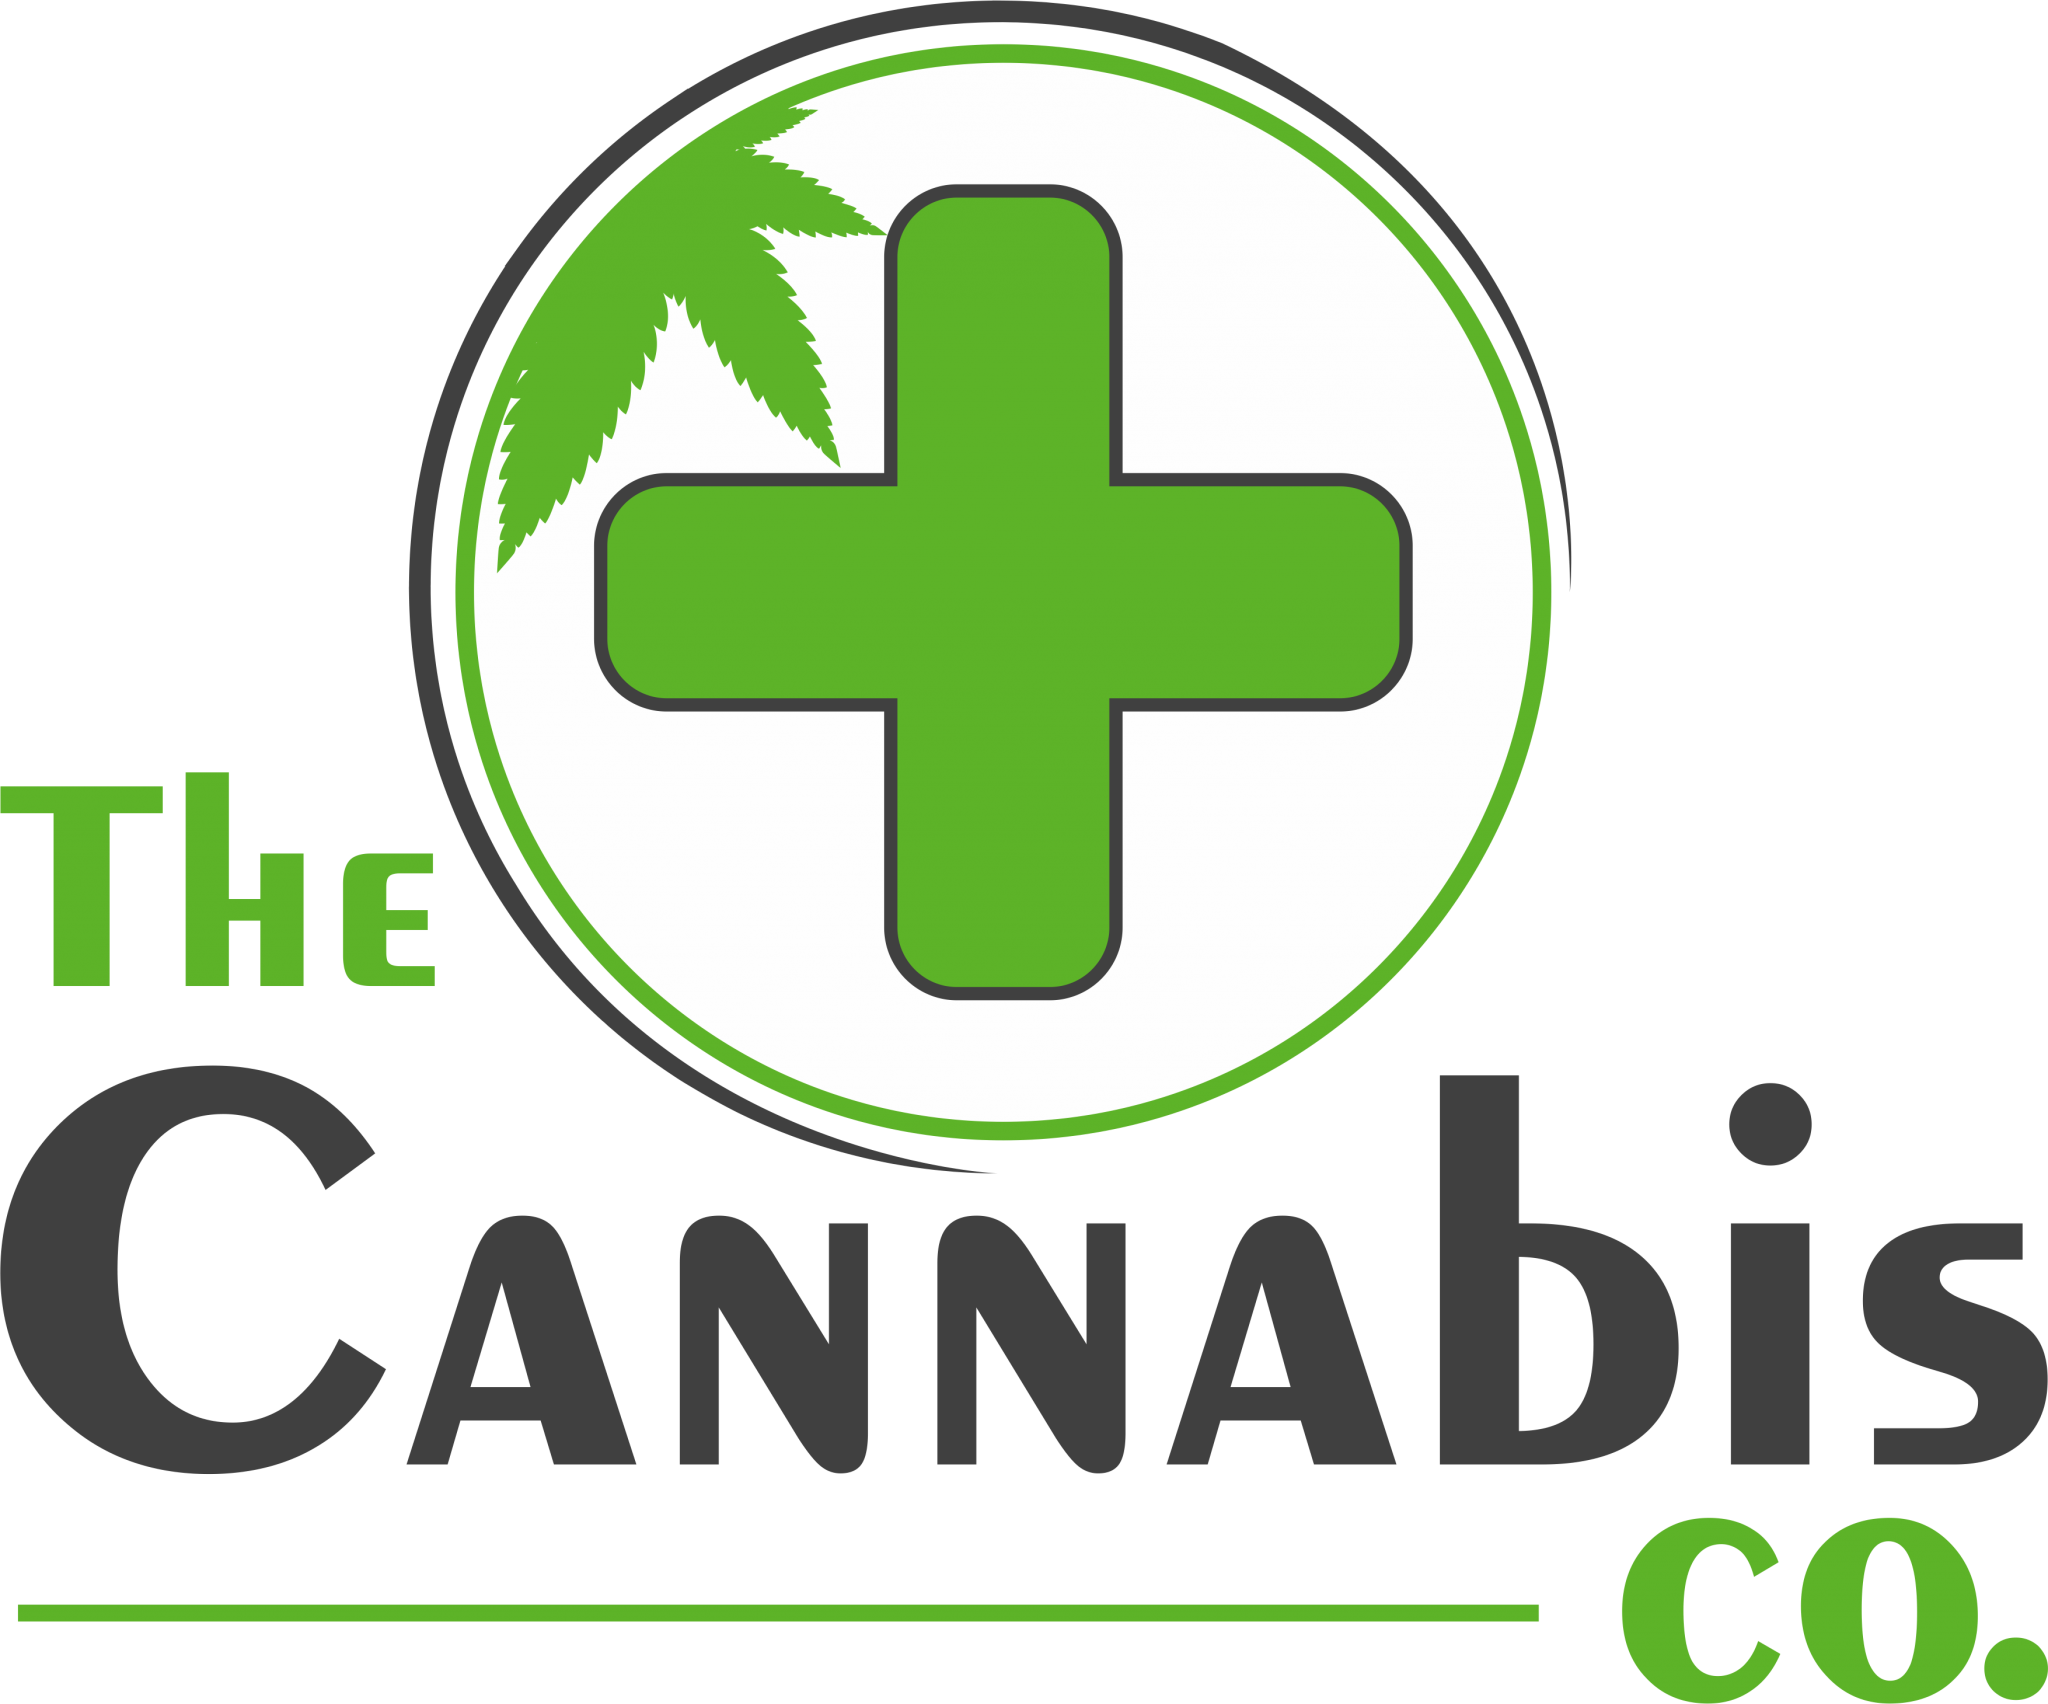 The Cannabis Co. – The Cannabis Co.